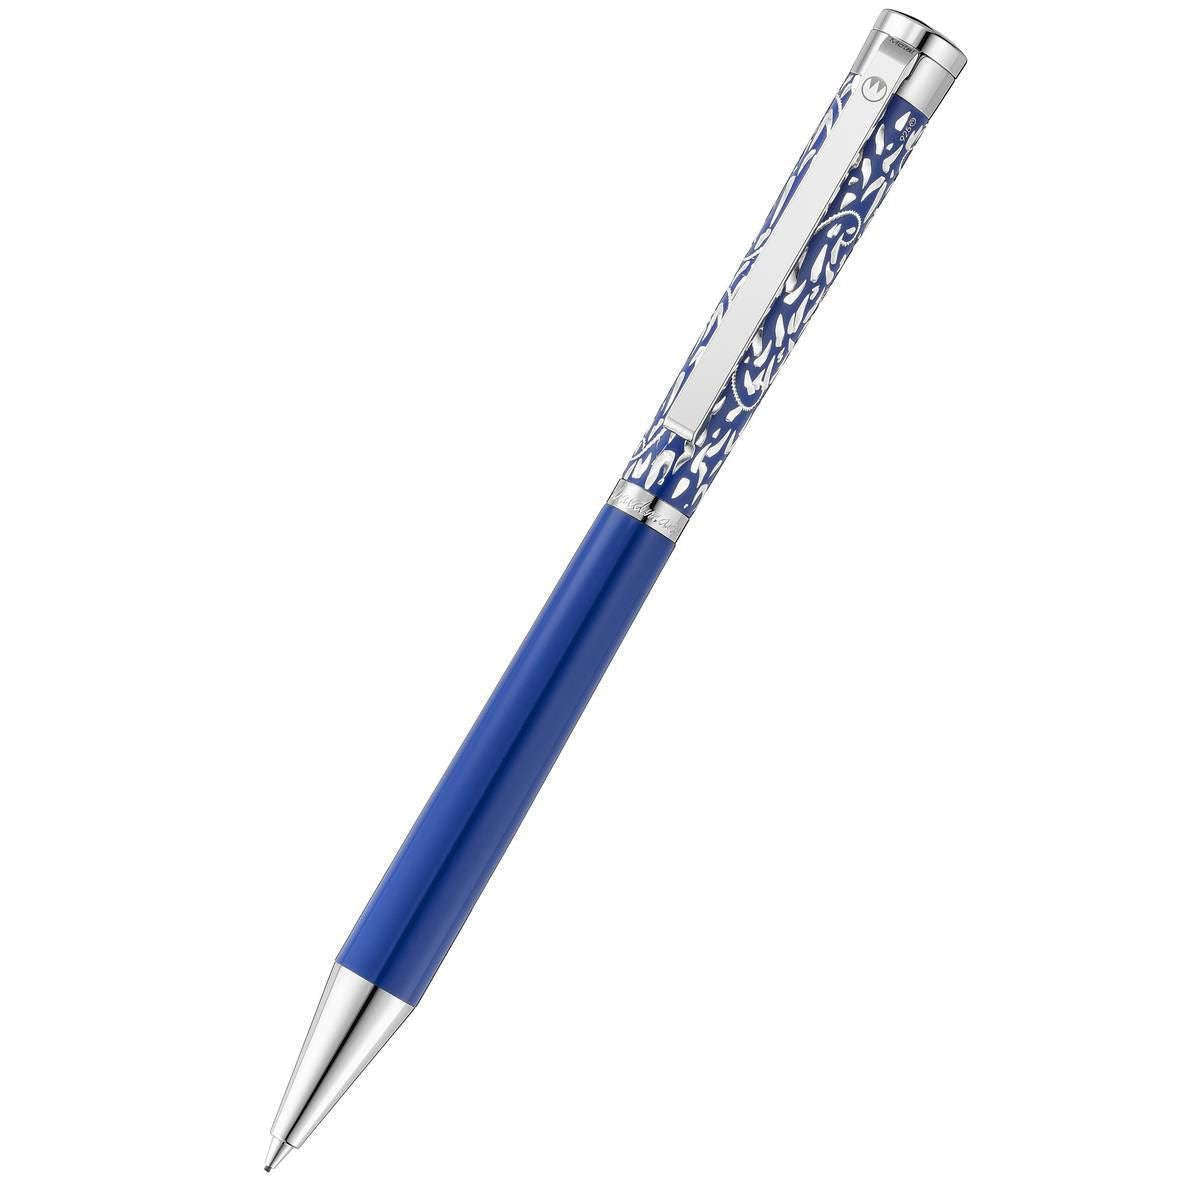 Waldmann Pens Xetra Vienna Special Edition Pencil - Blue/Silver